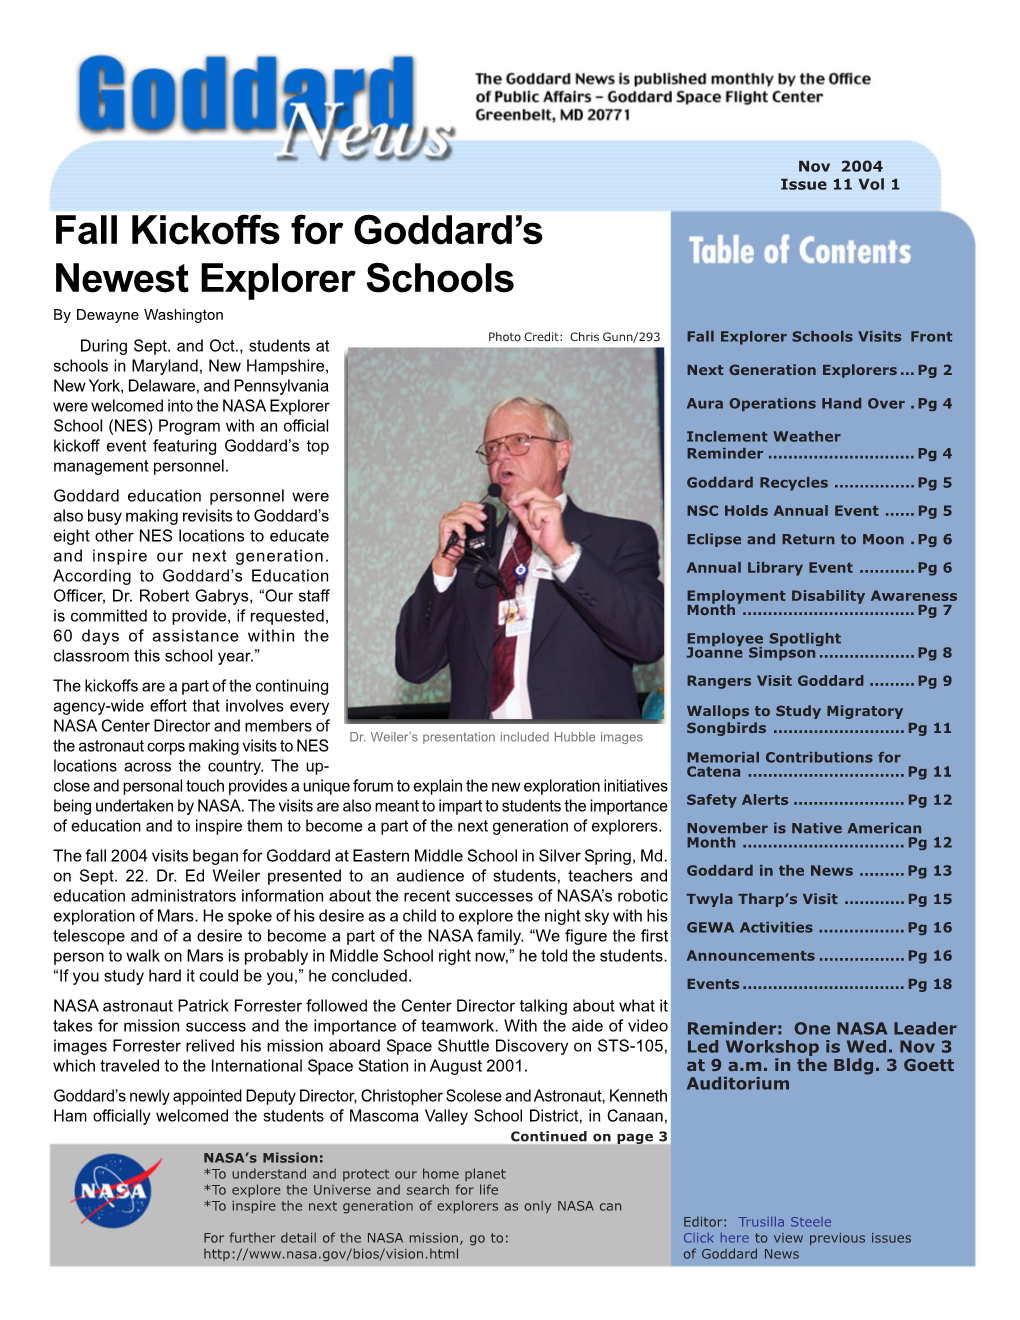 Fall Kickoffs for Goddard's Newest Explorer Schools